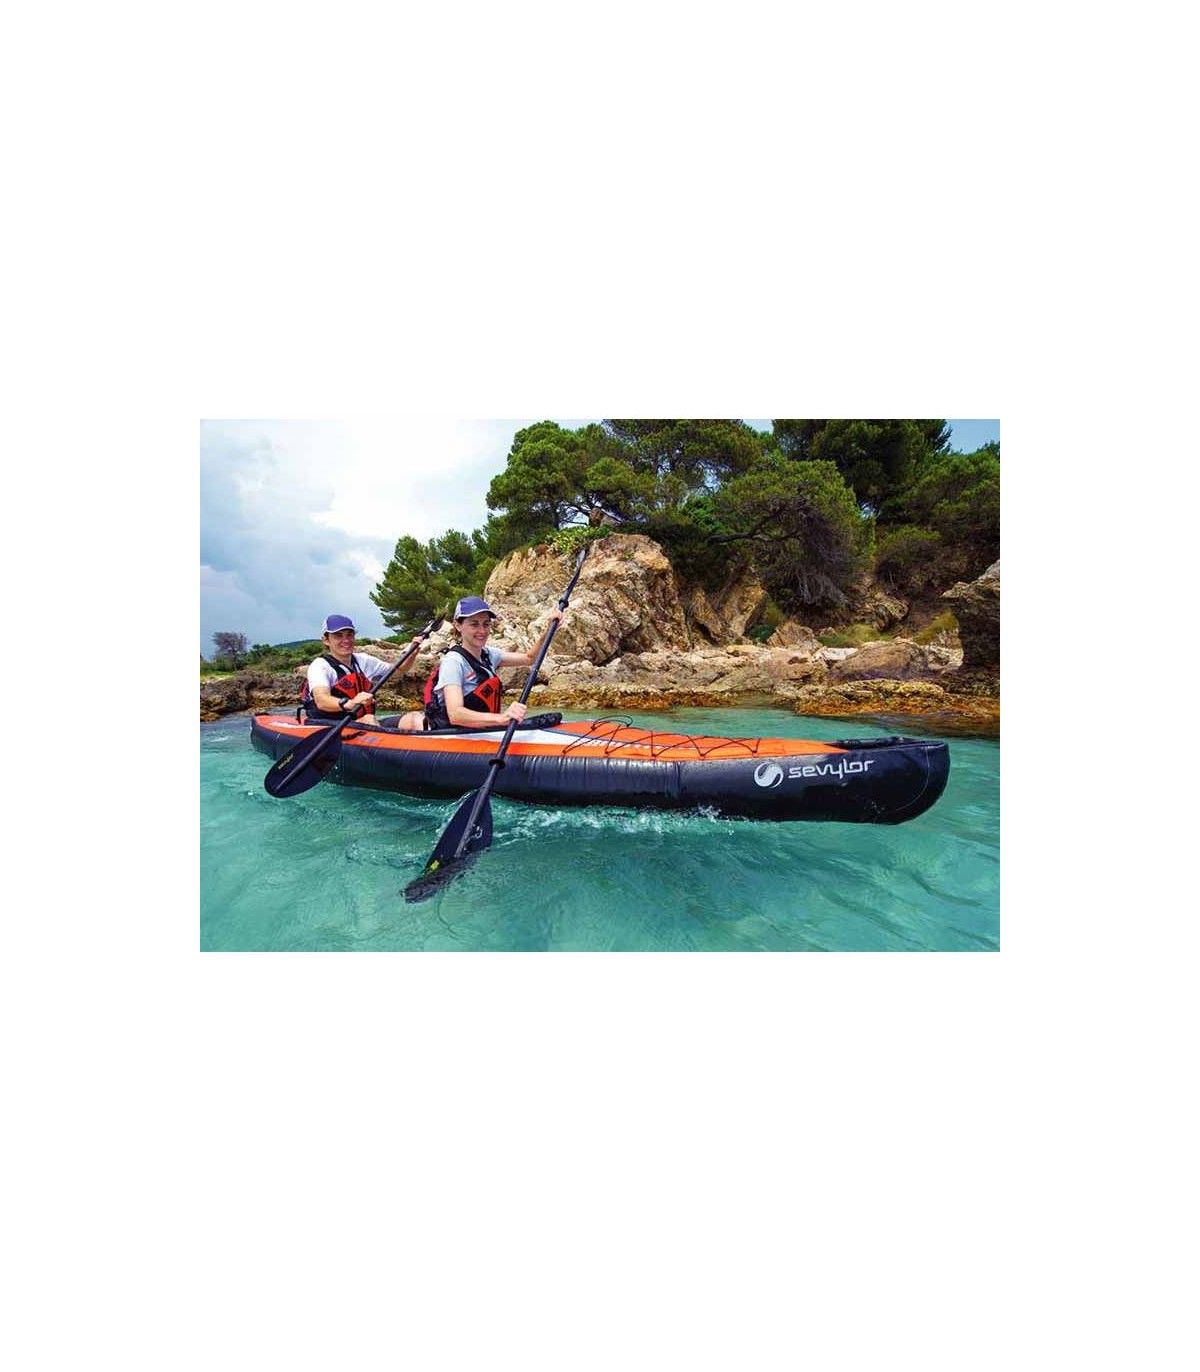 Kayak Hinchable 2 plazas Pointer k2 Sevylor - Outlet Piscinas